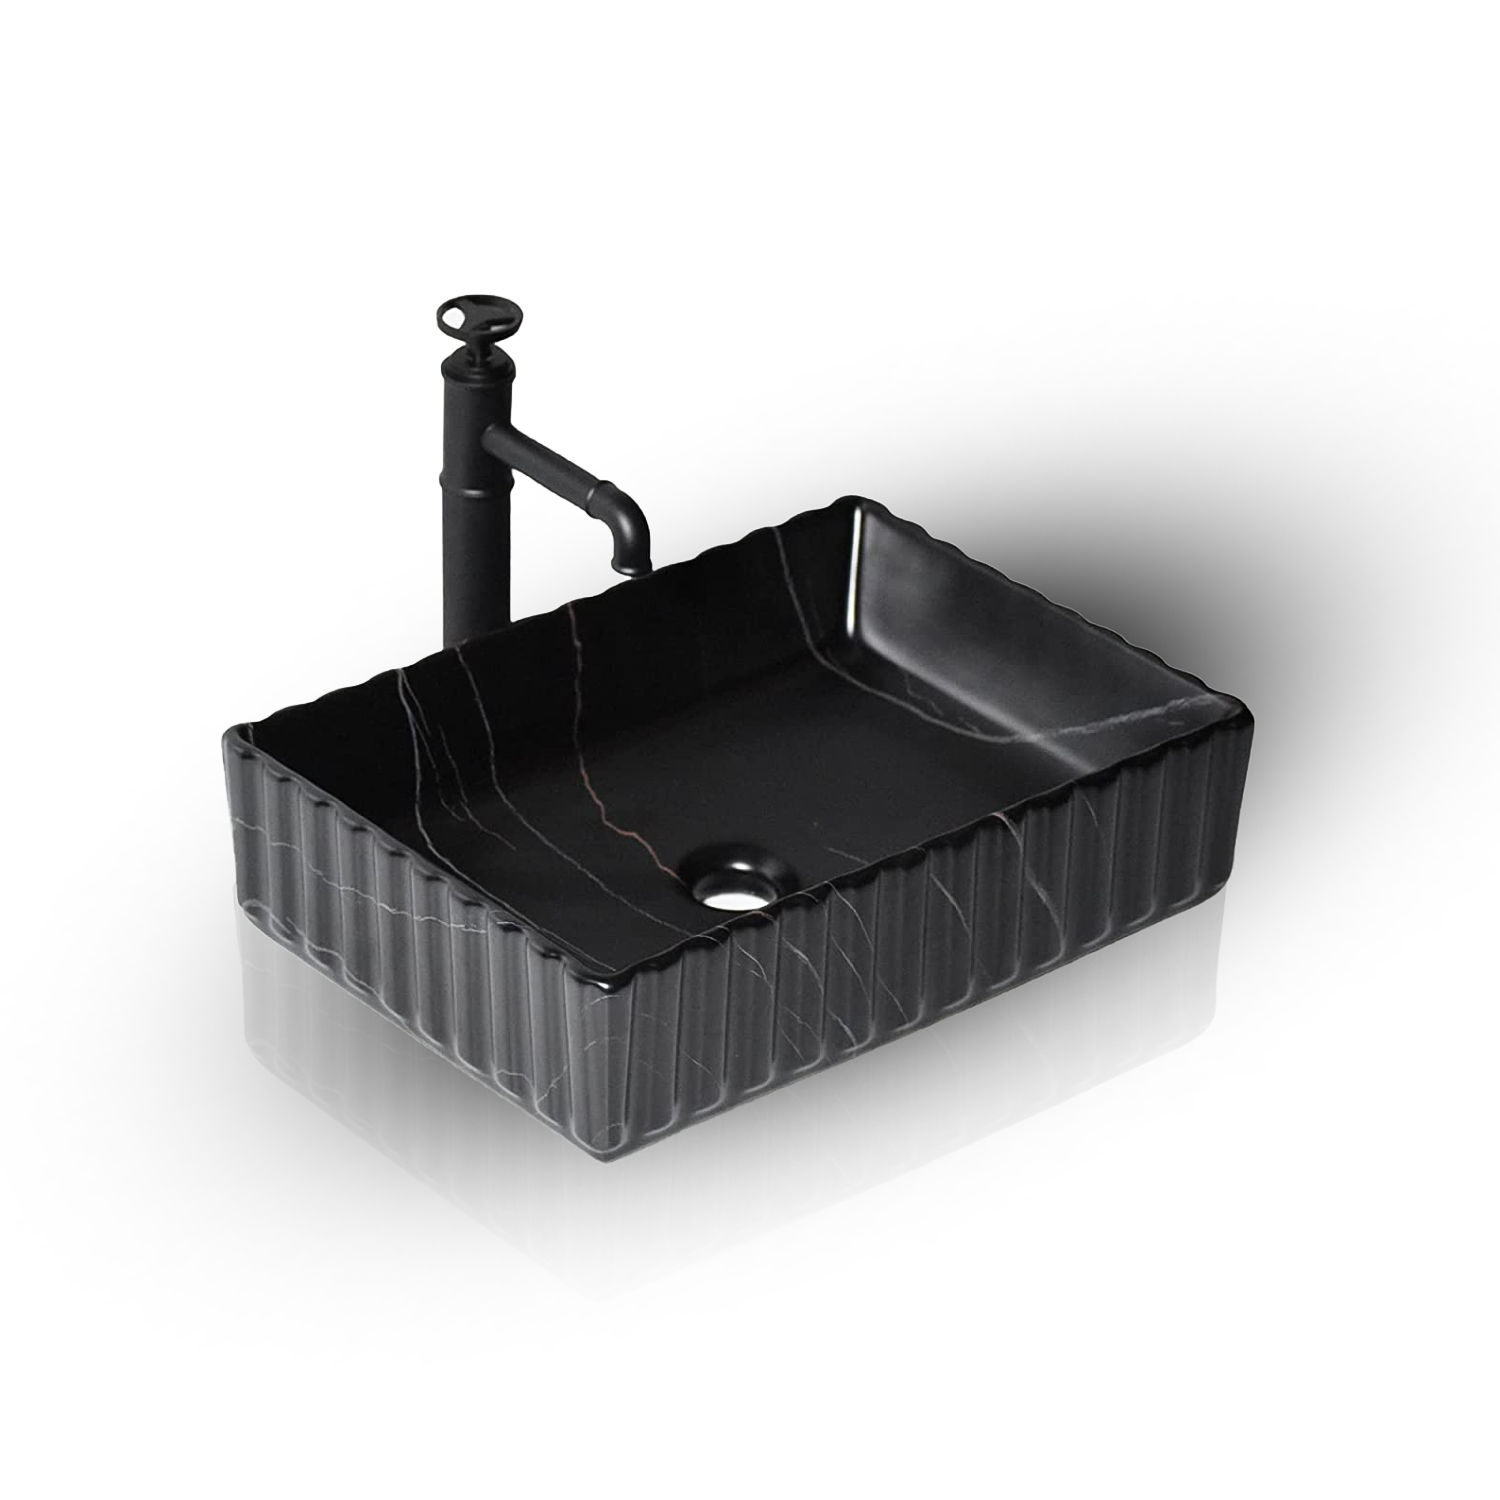 inart black color wash basin 